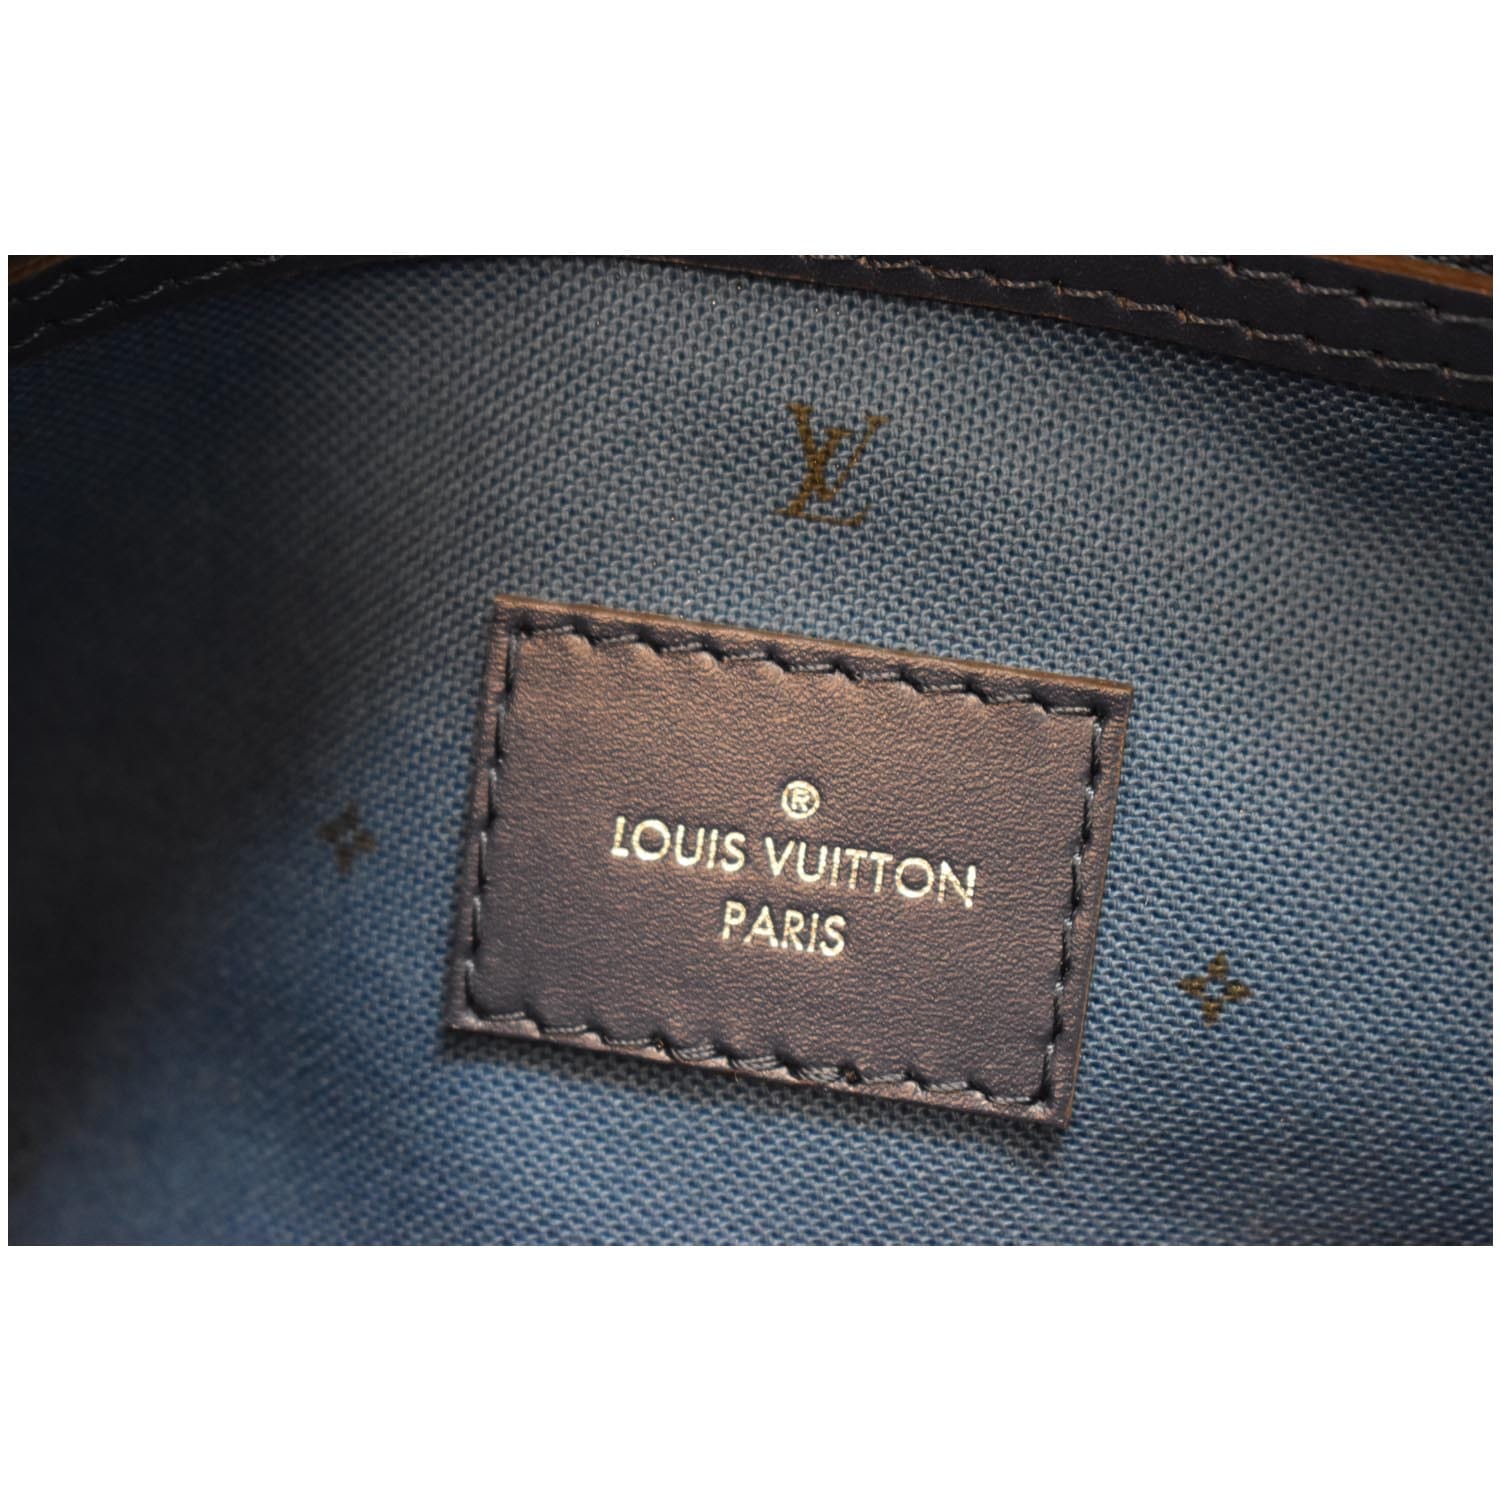 LOUIS VUITTON Tie-Dye Monogram ESCALE SPEEDY BANDOULIÈRE 30 Handbag M45146  P